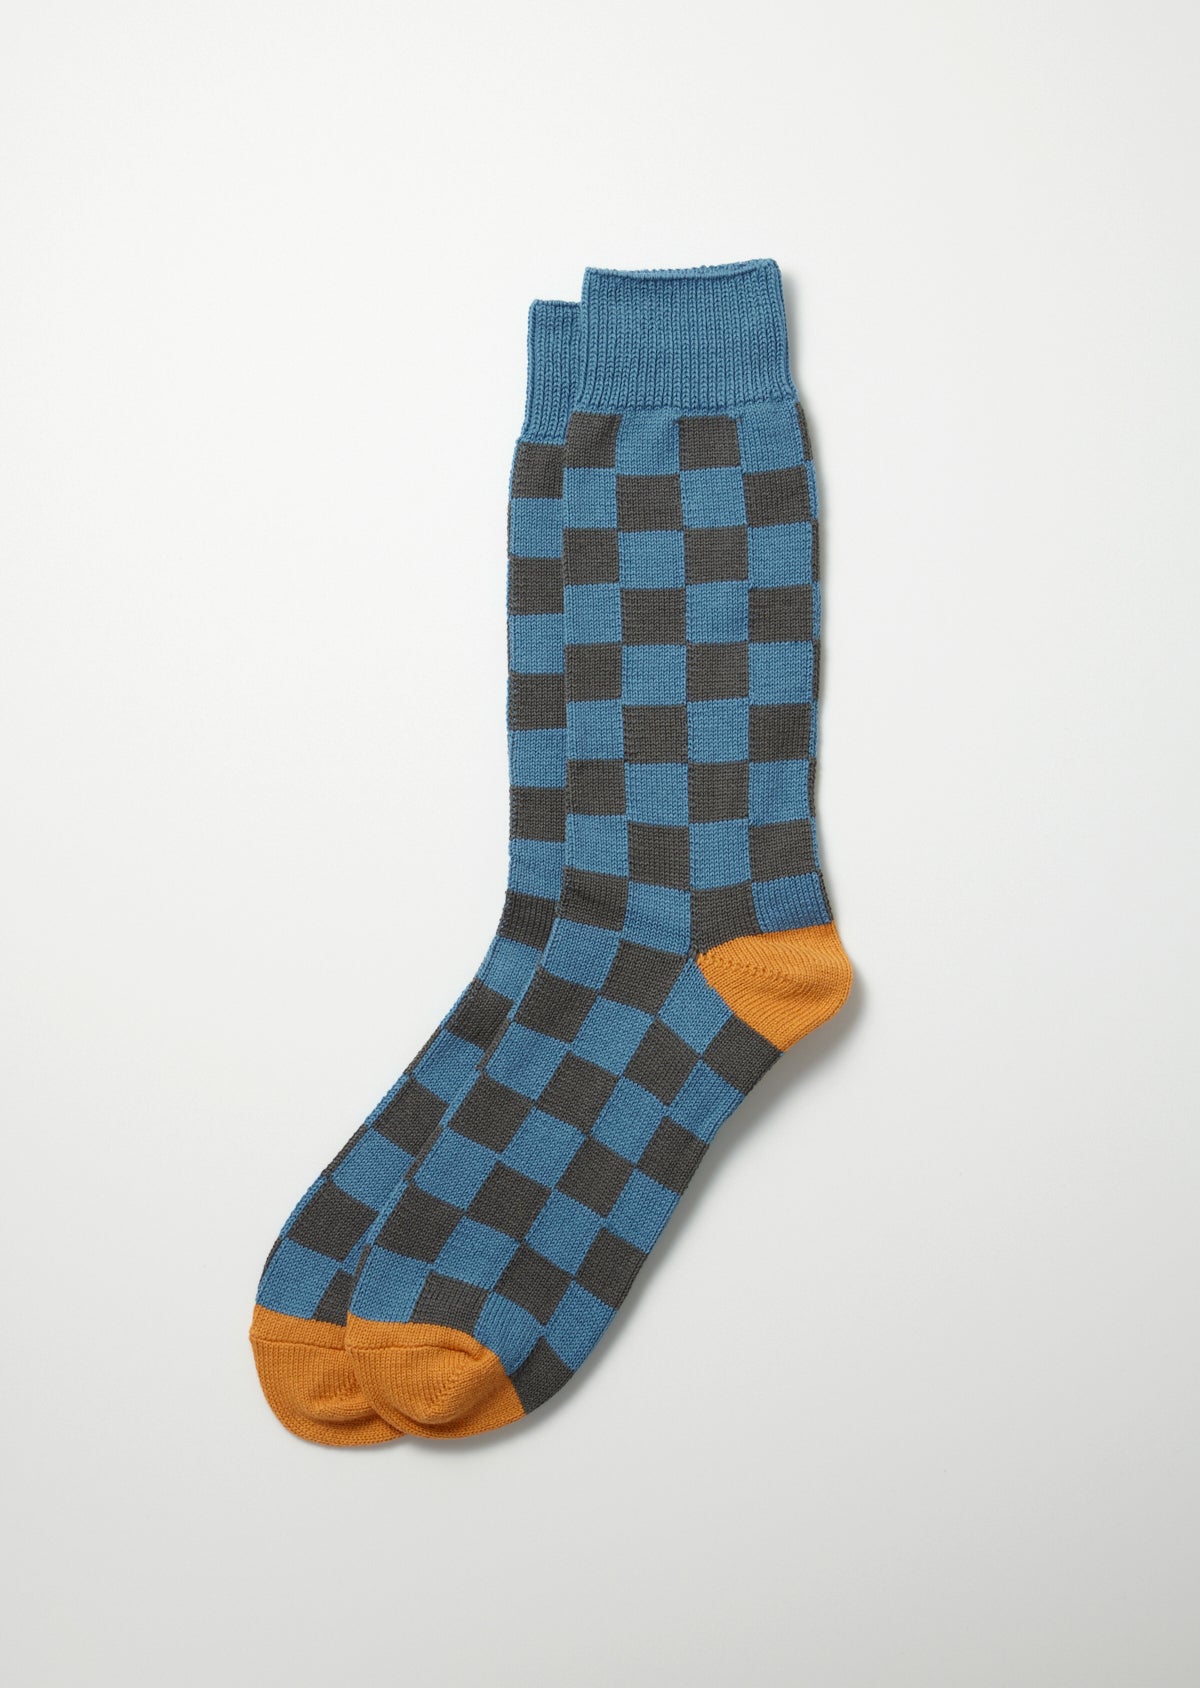 Rototo Checkerboard Crew Socks in light blue, dark grey and light orange